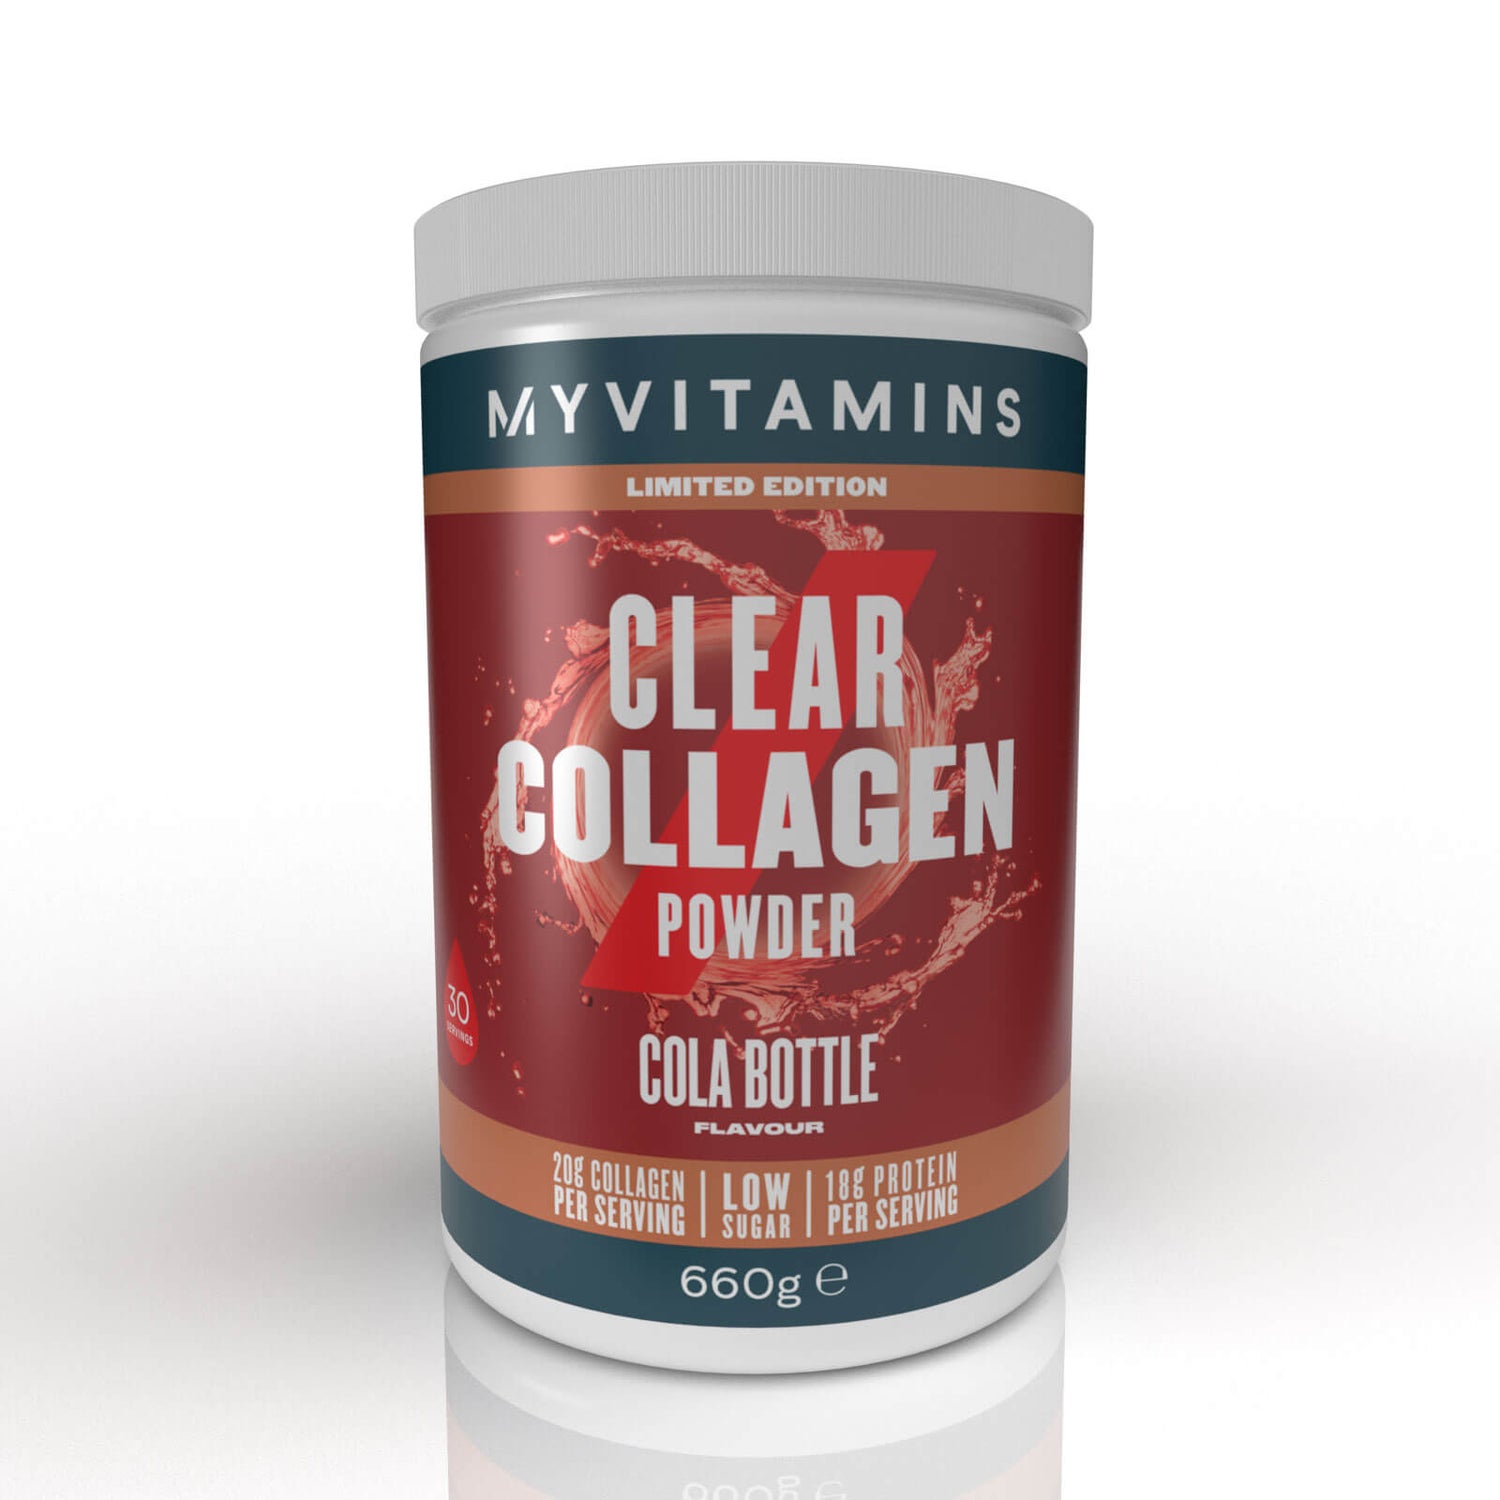 Clear Collagen Powder - 30servings - Cola Bottle